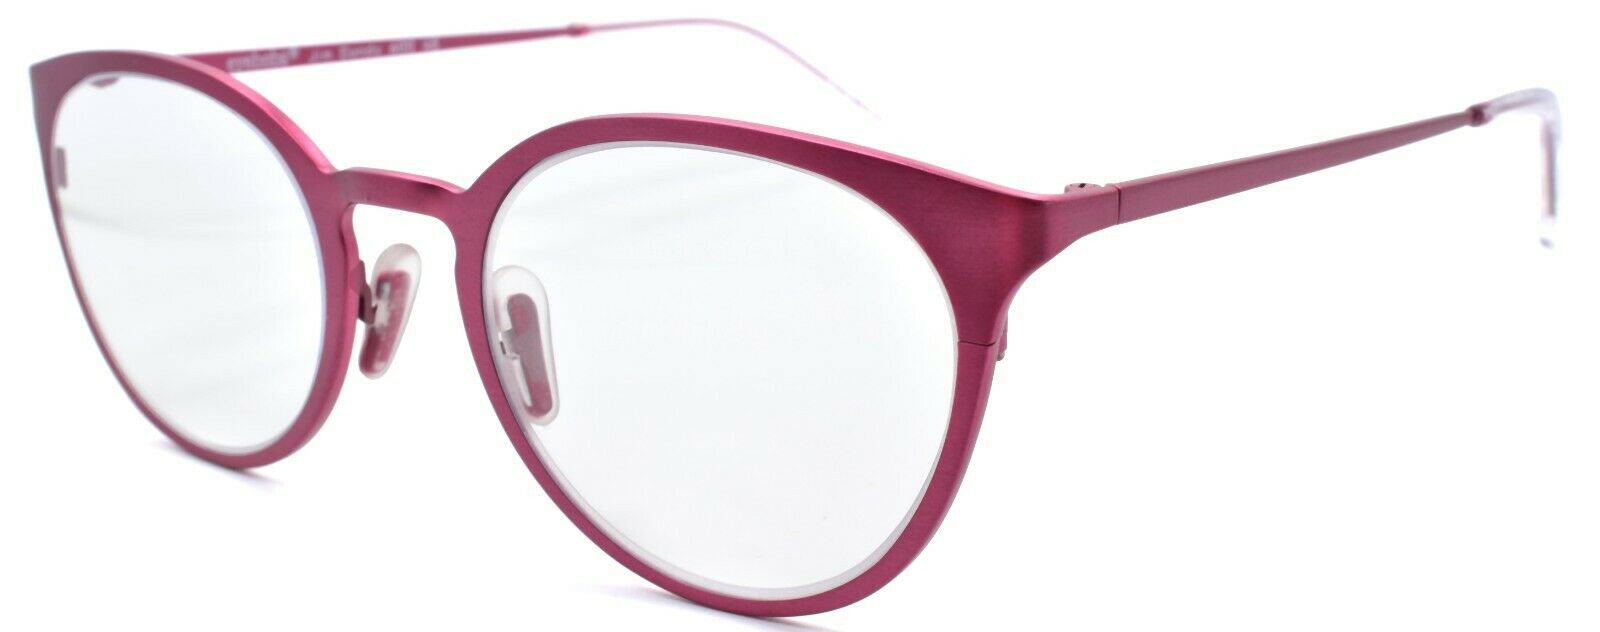 1-Eyebobs Jim Dandy 600 45 Reading Glasses Pink +1.25-842754137683-IKSpecs